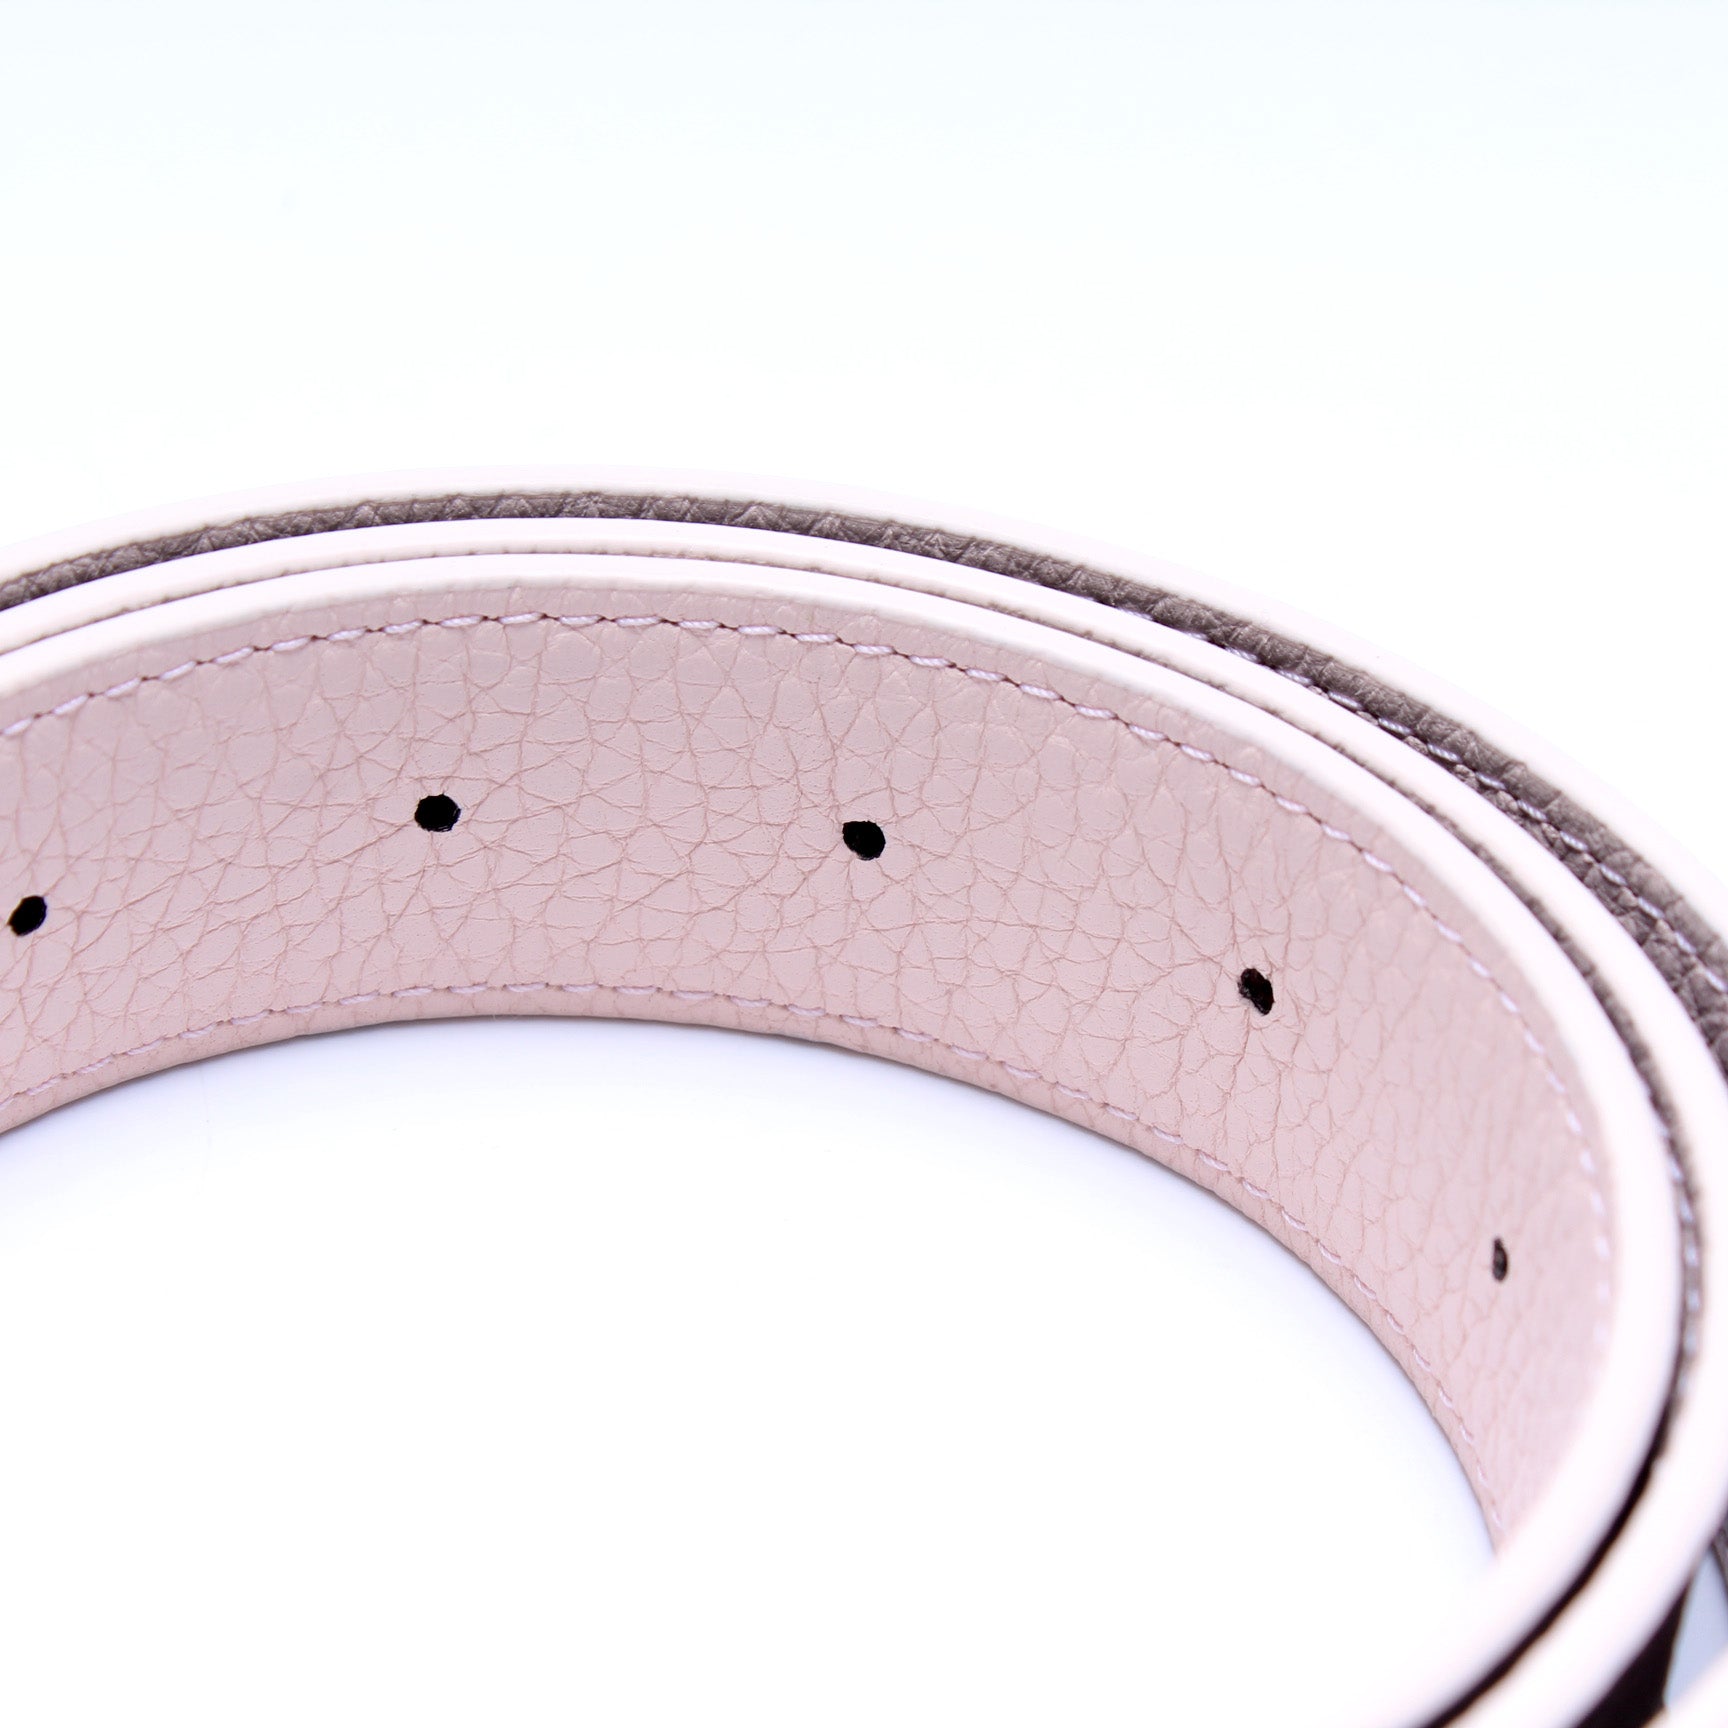 Louis Vuitton LV Initiales 30mm Reversible Belt Pink Leather. Size 90 cm